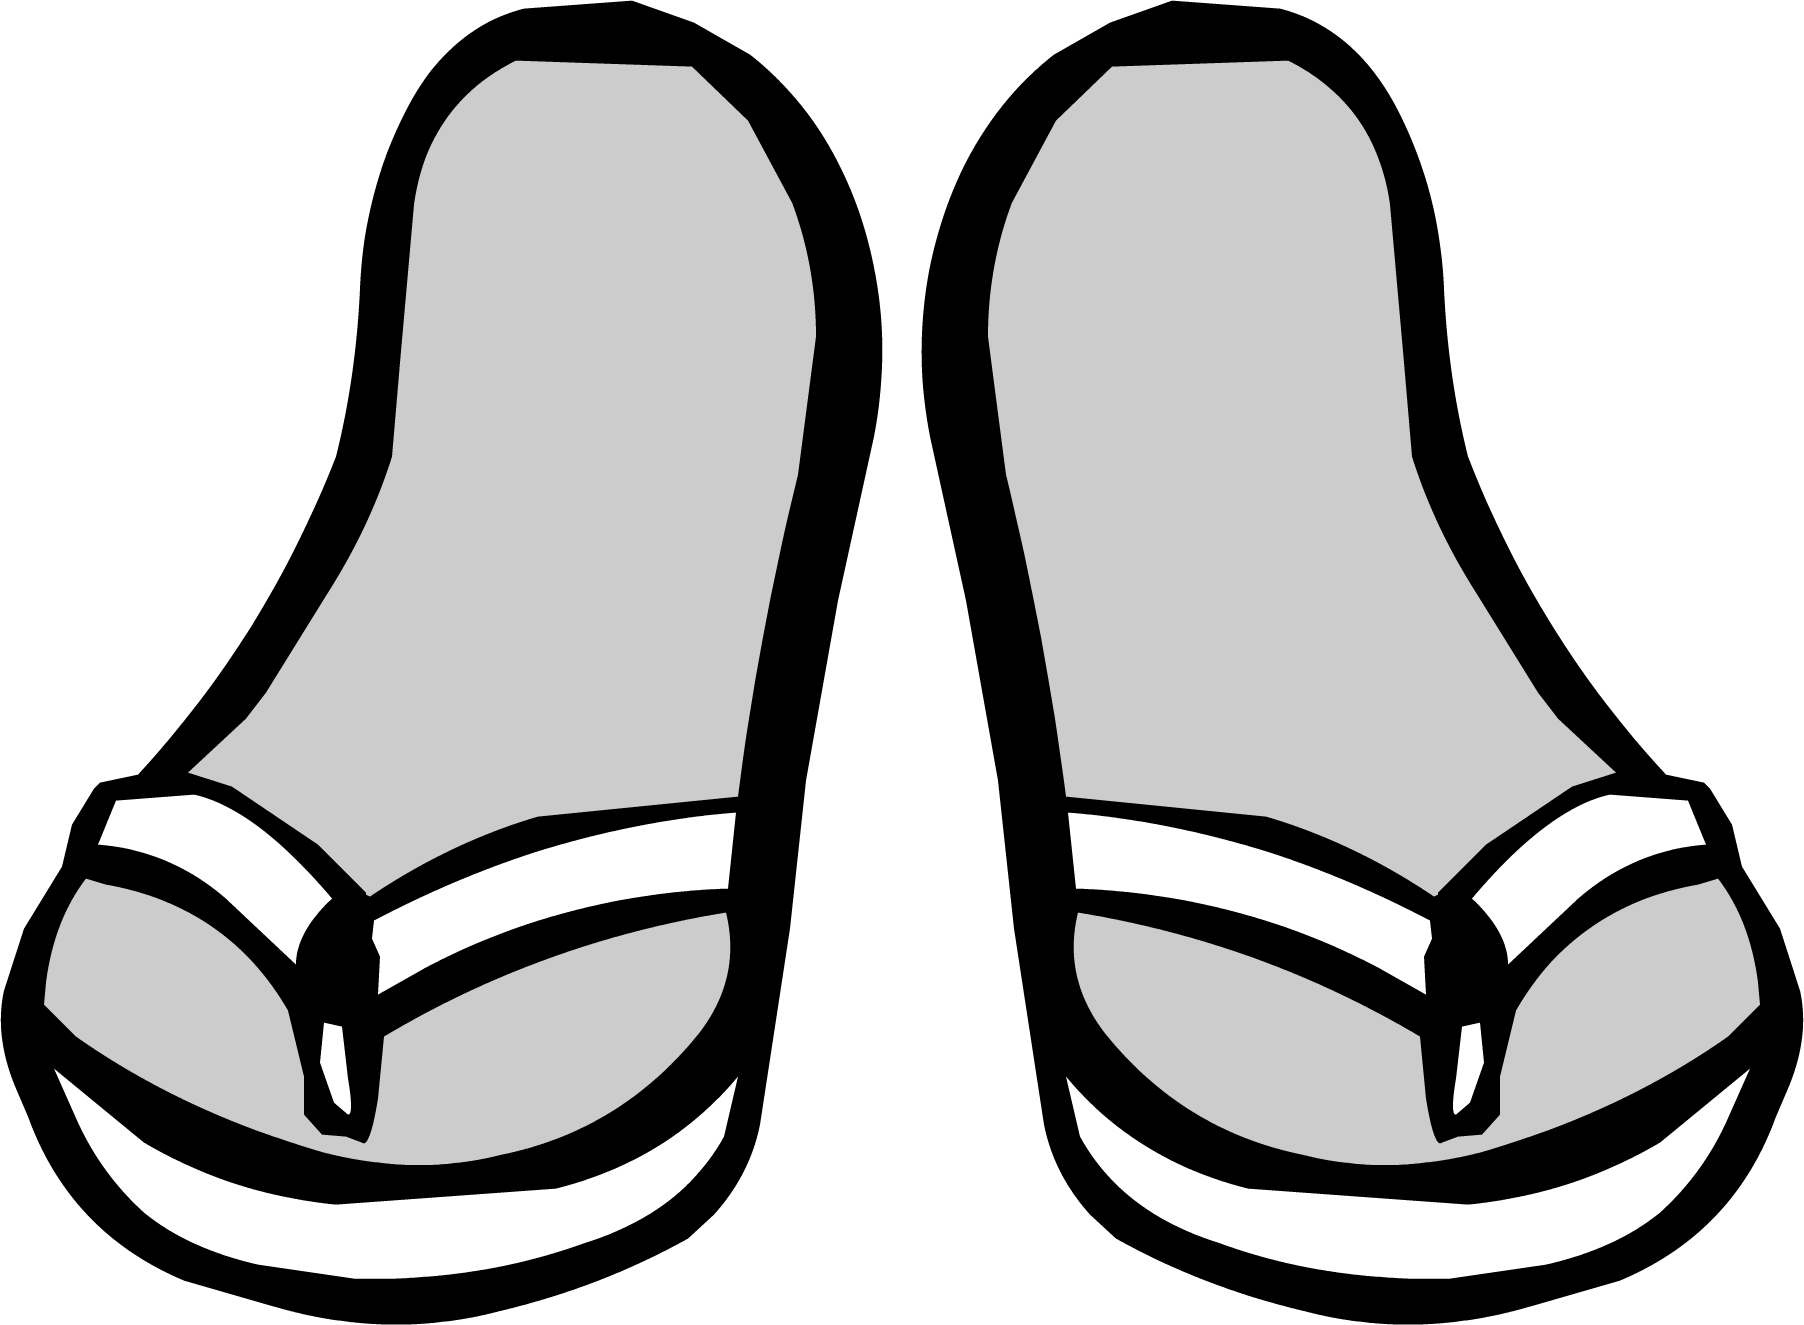 White sandals club penguin. Foot clipart sandal